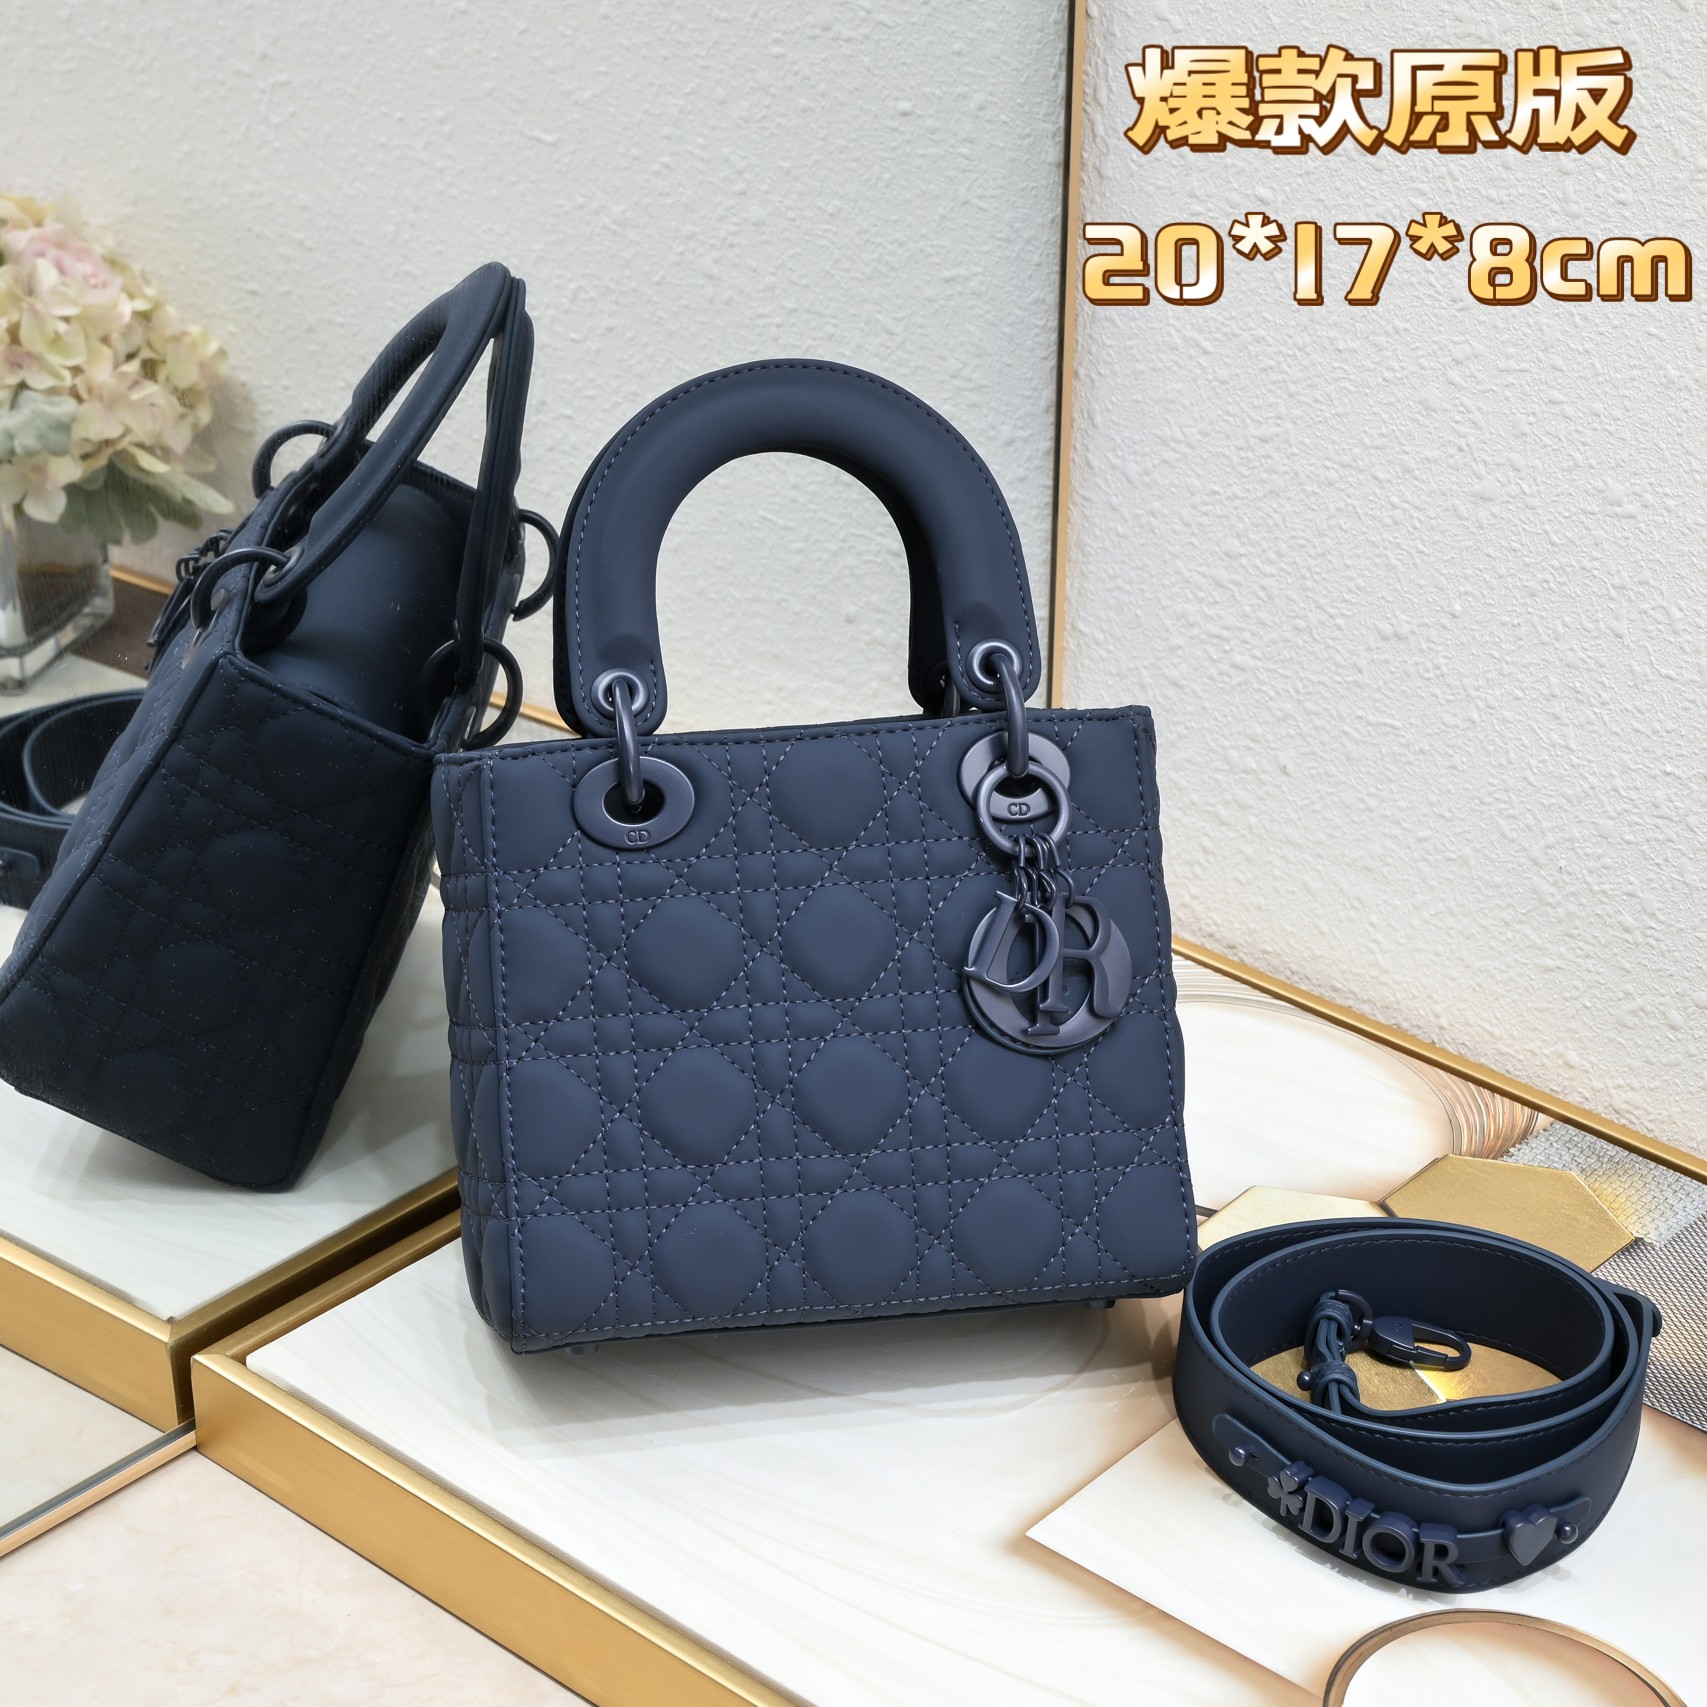 Dior Lady Handbags Crossbody & Shoulder Bags Black Blue Calfskin Frosted Matte Sheepskin Chains